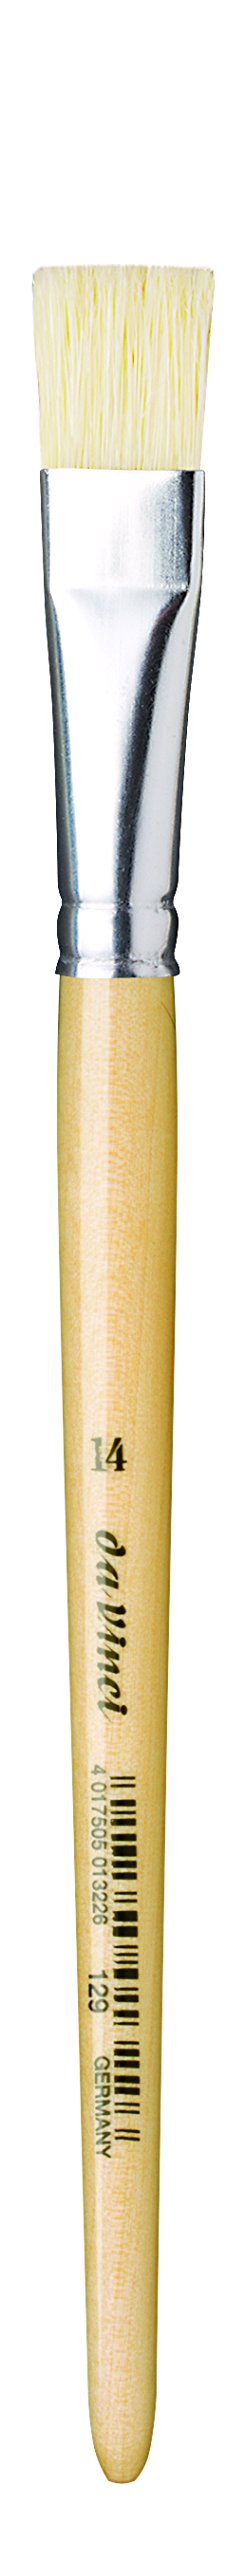 Pennelli Da Vinci Junior borste punta piatta setola sintetica n.14